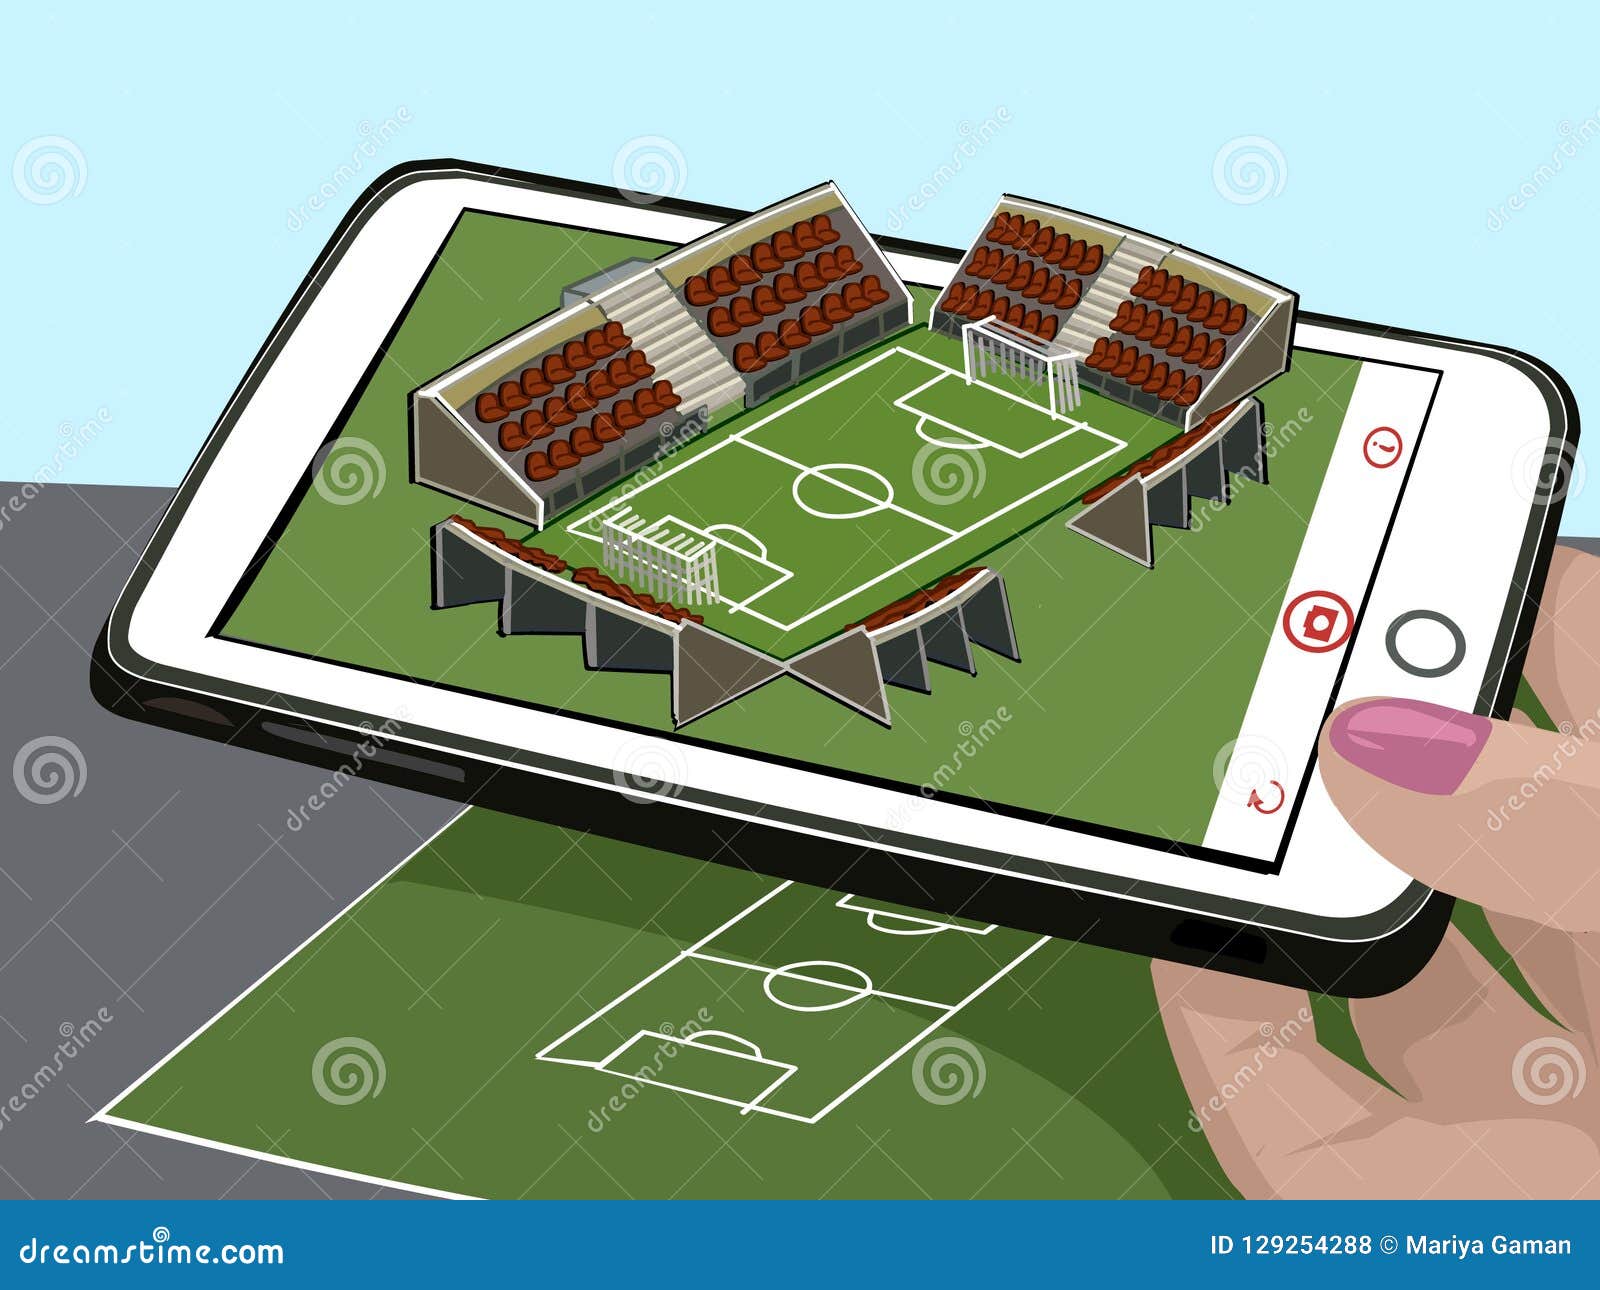 Football Stadium Sketch Cliparts, Stock Vector and Royalty Free Football  Stadium Sketch Illustrations